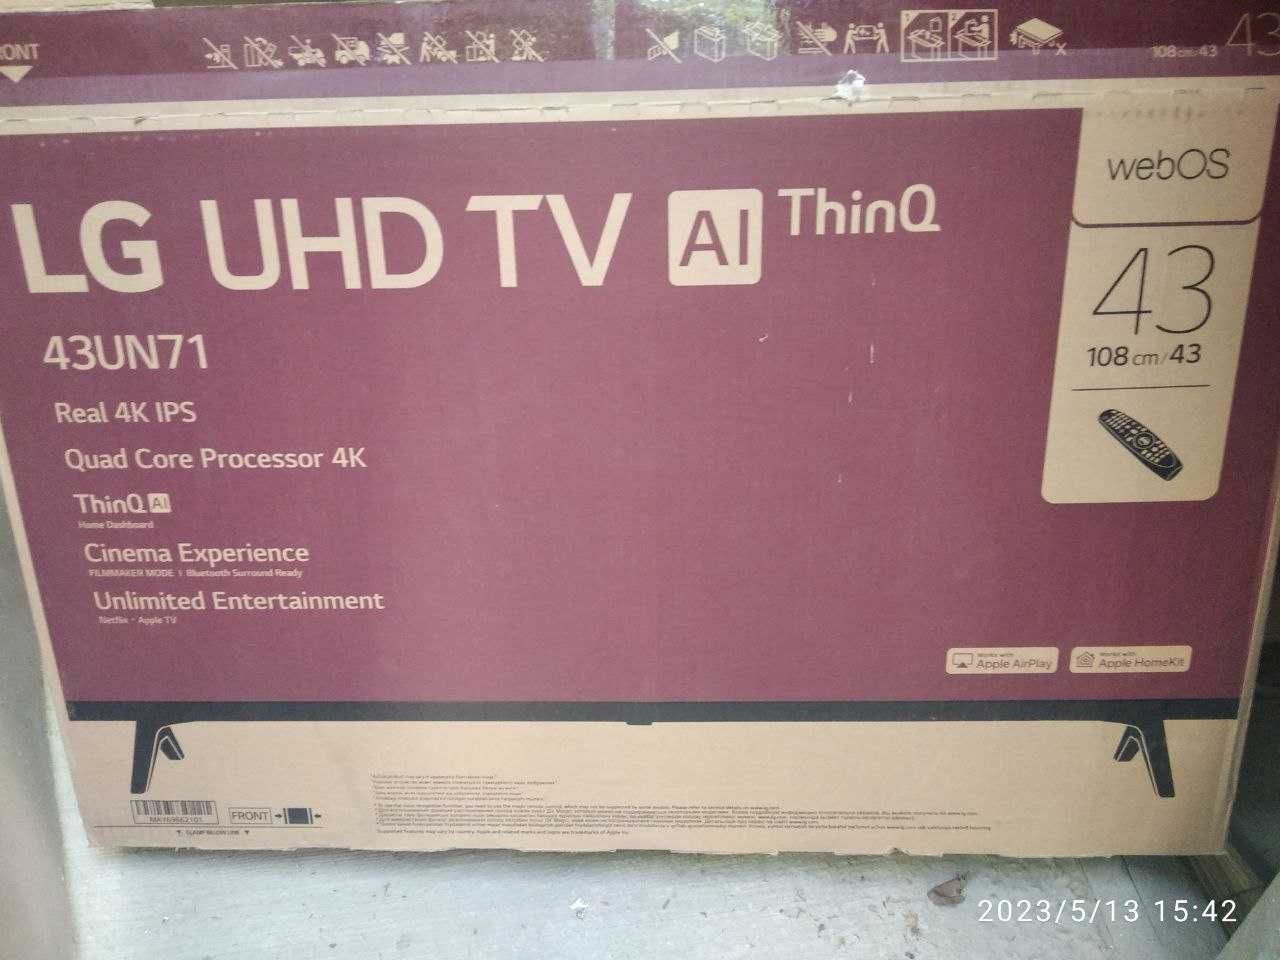 Продается телевизор LG UHD TV 43 UN71 Индонезия с ГАРАНТИЕЙ в паспорте